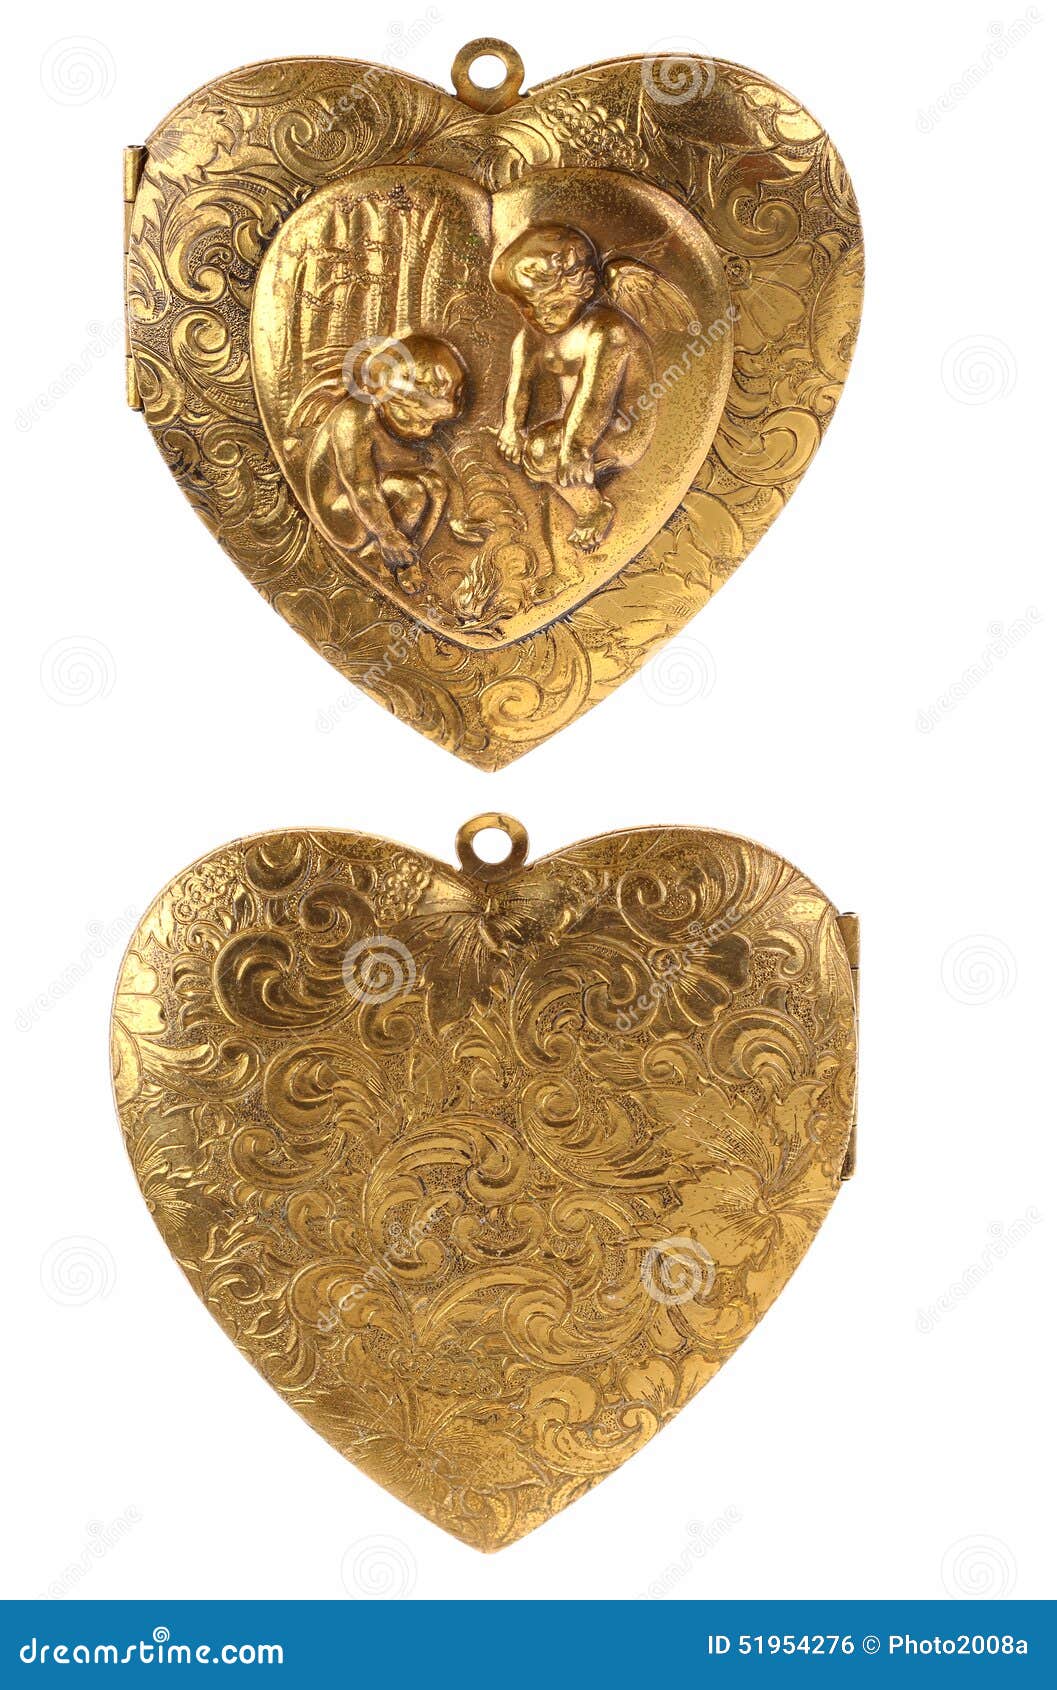 gold locket heart charm with cherubs